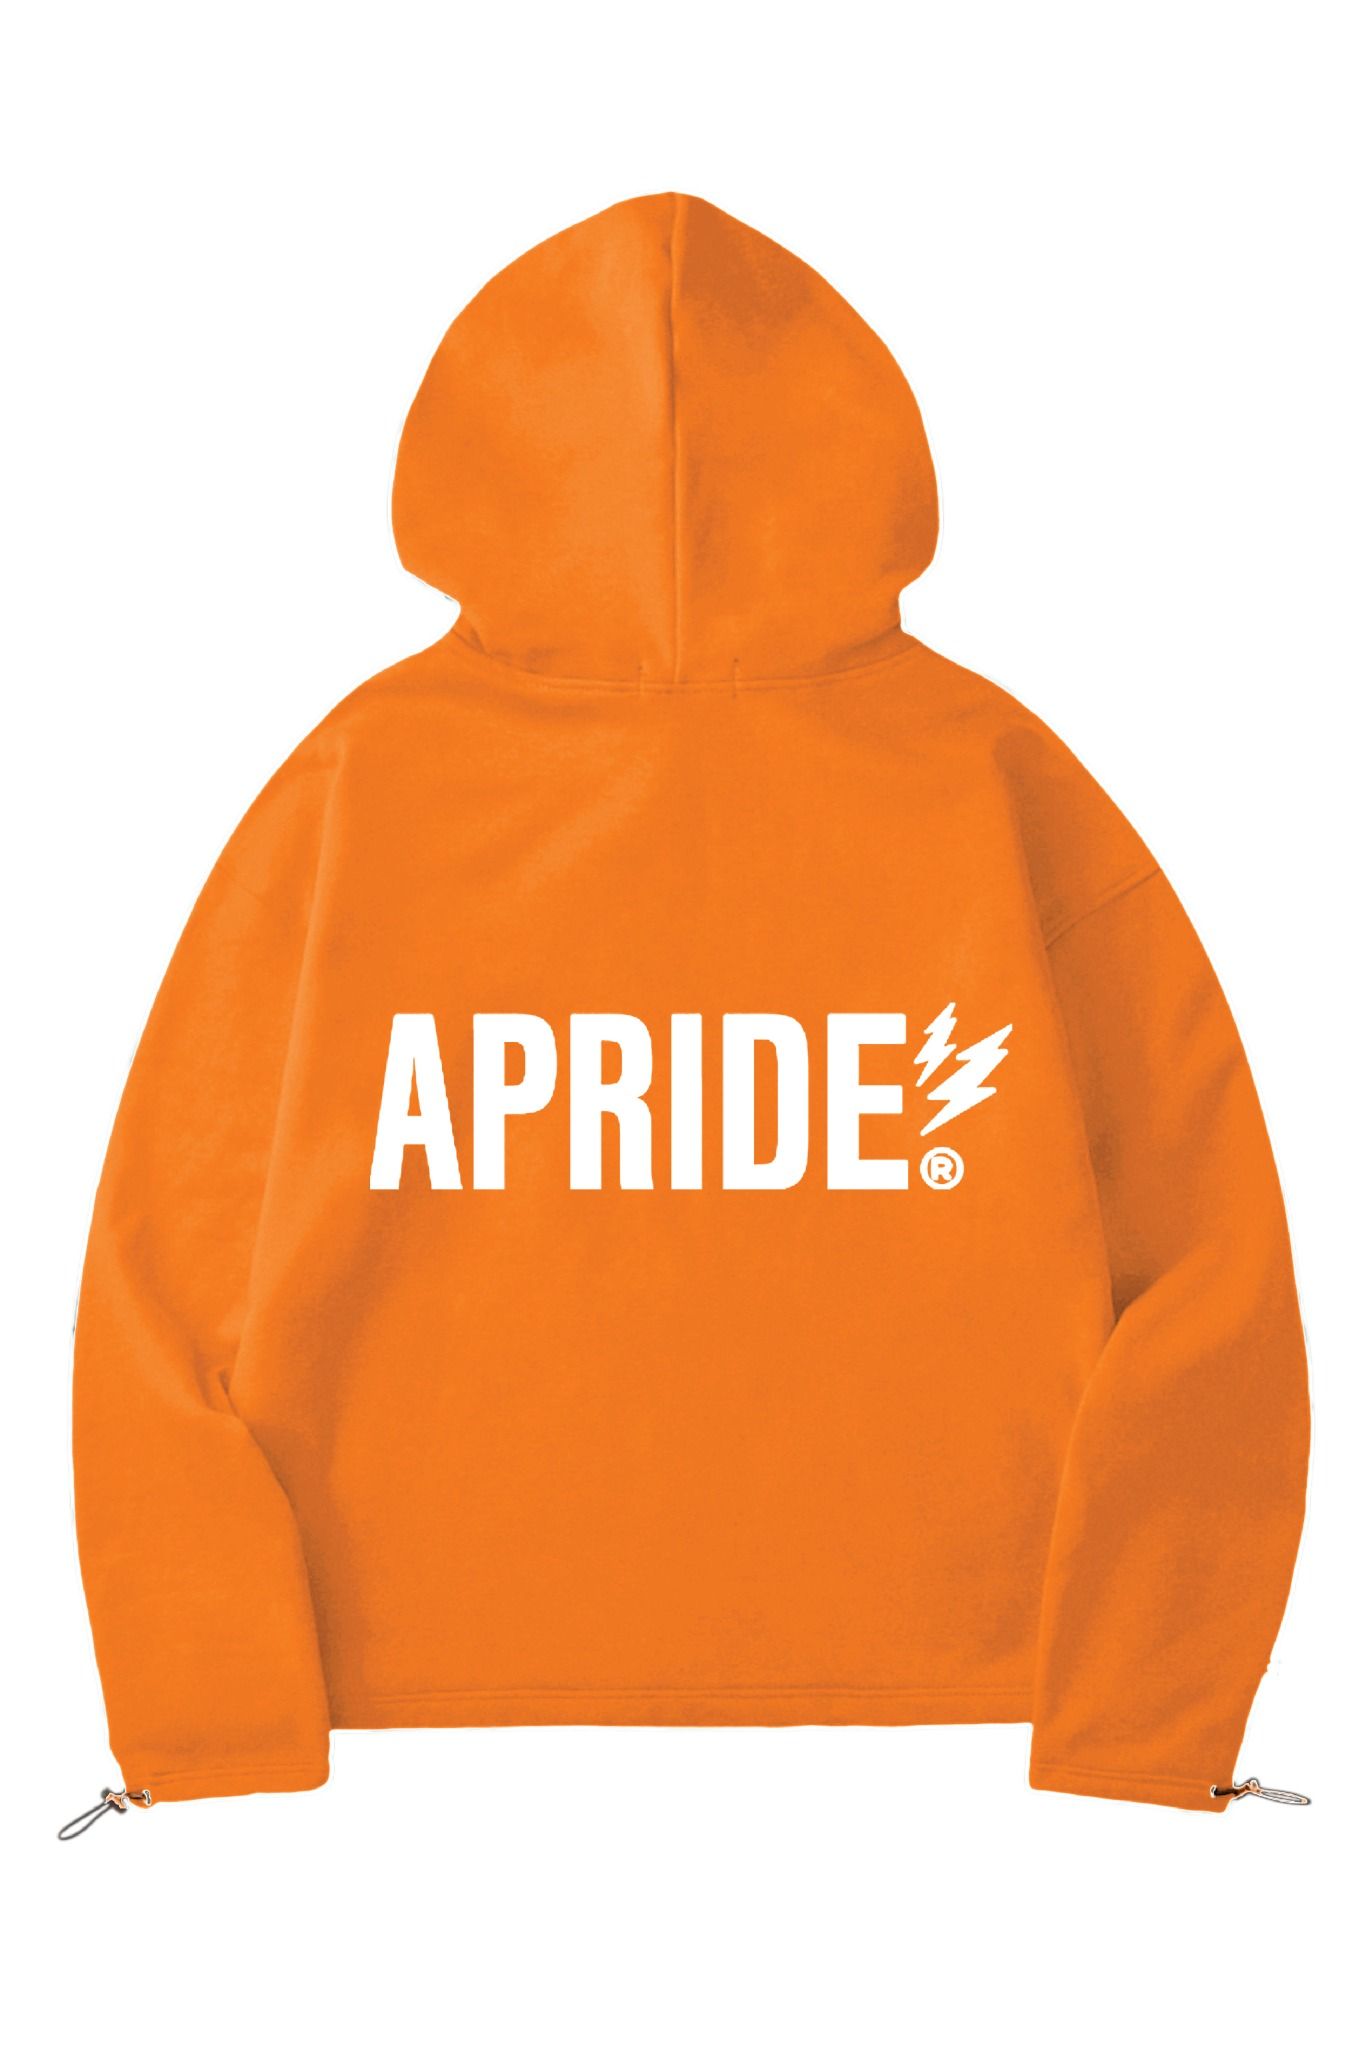  Apride Hoodies Basic Tiger Orange 